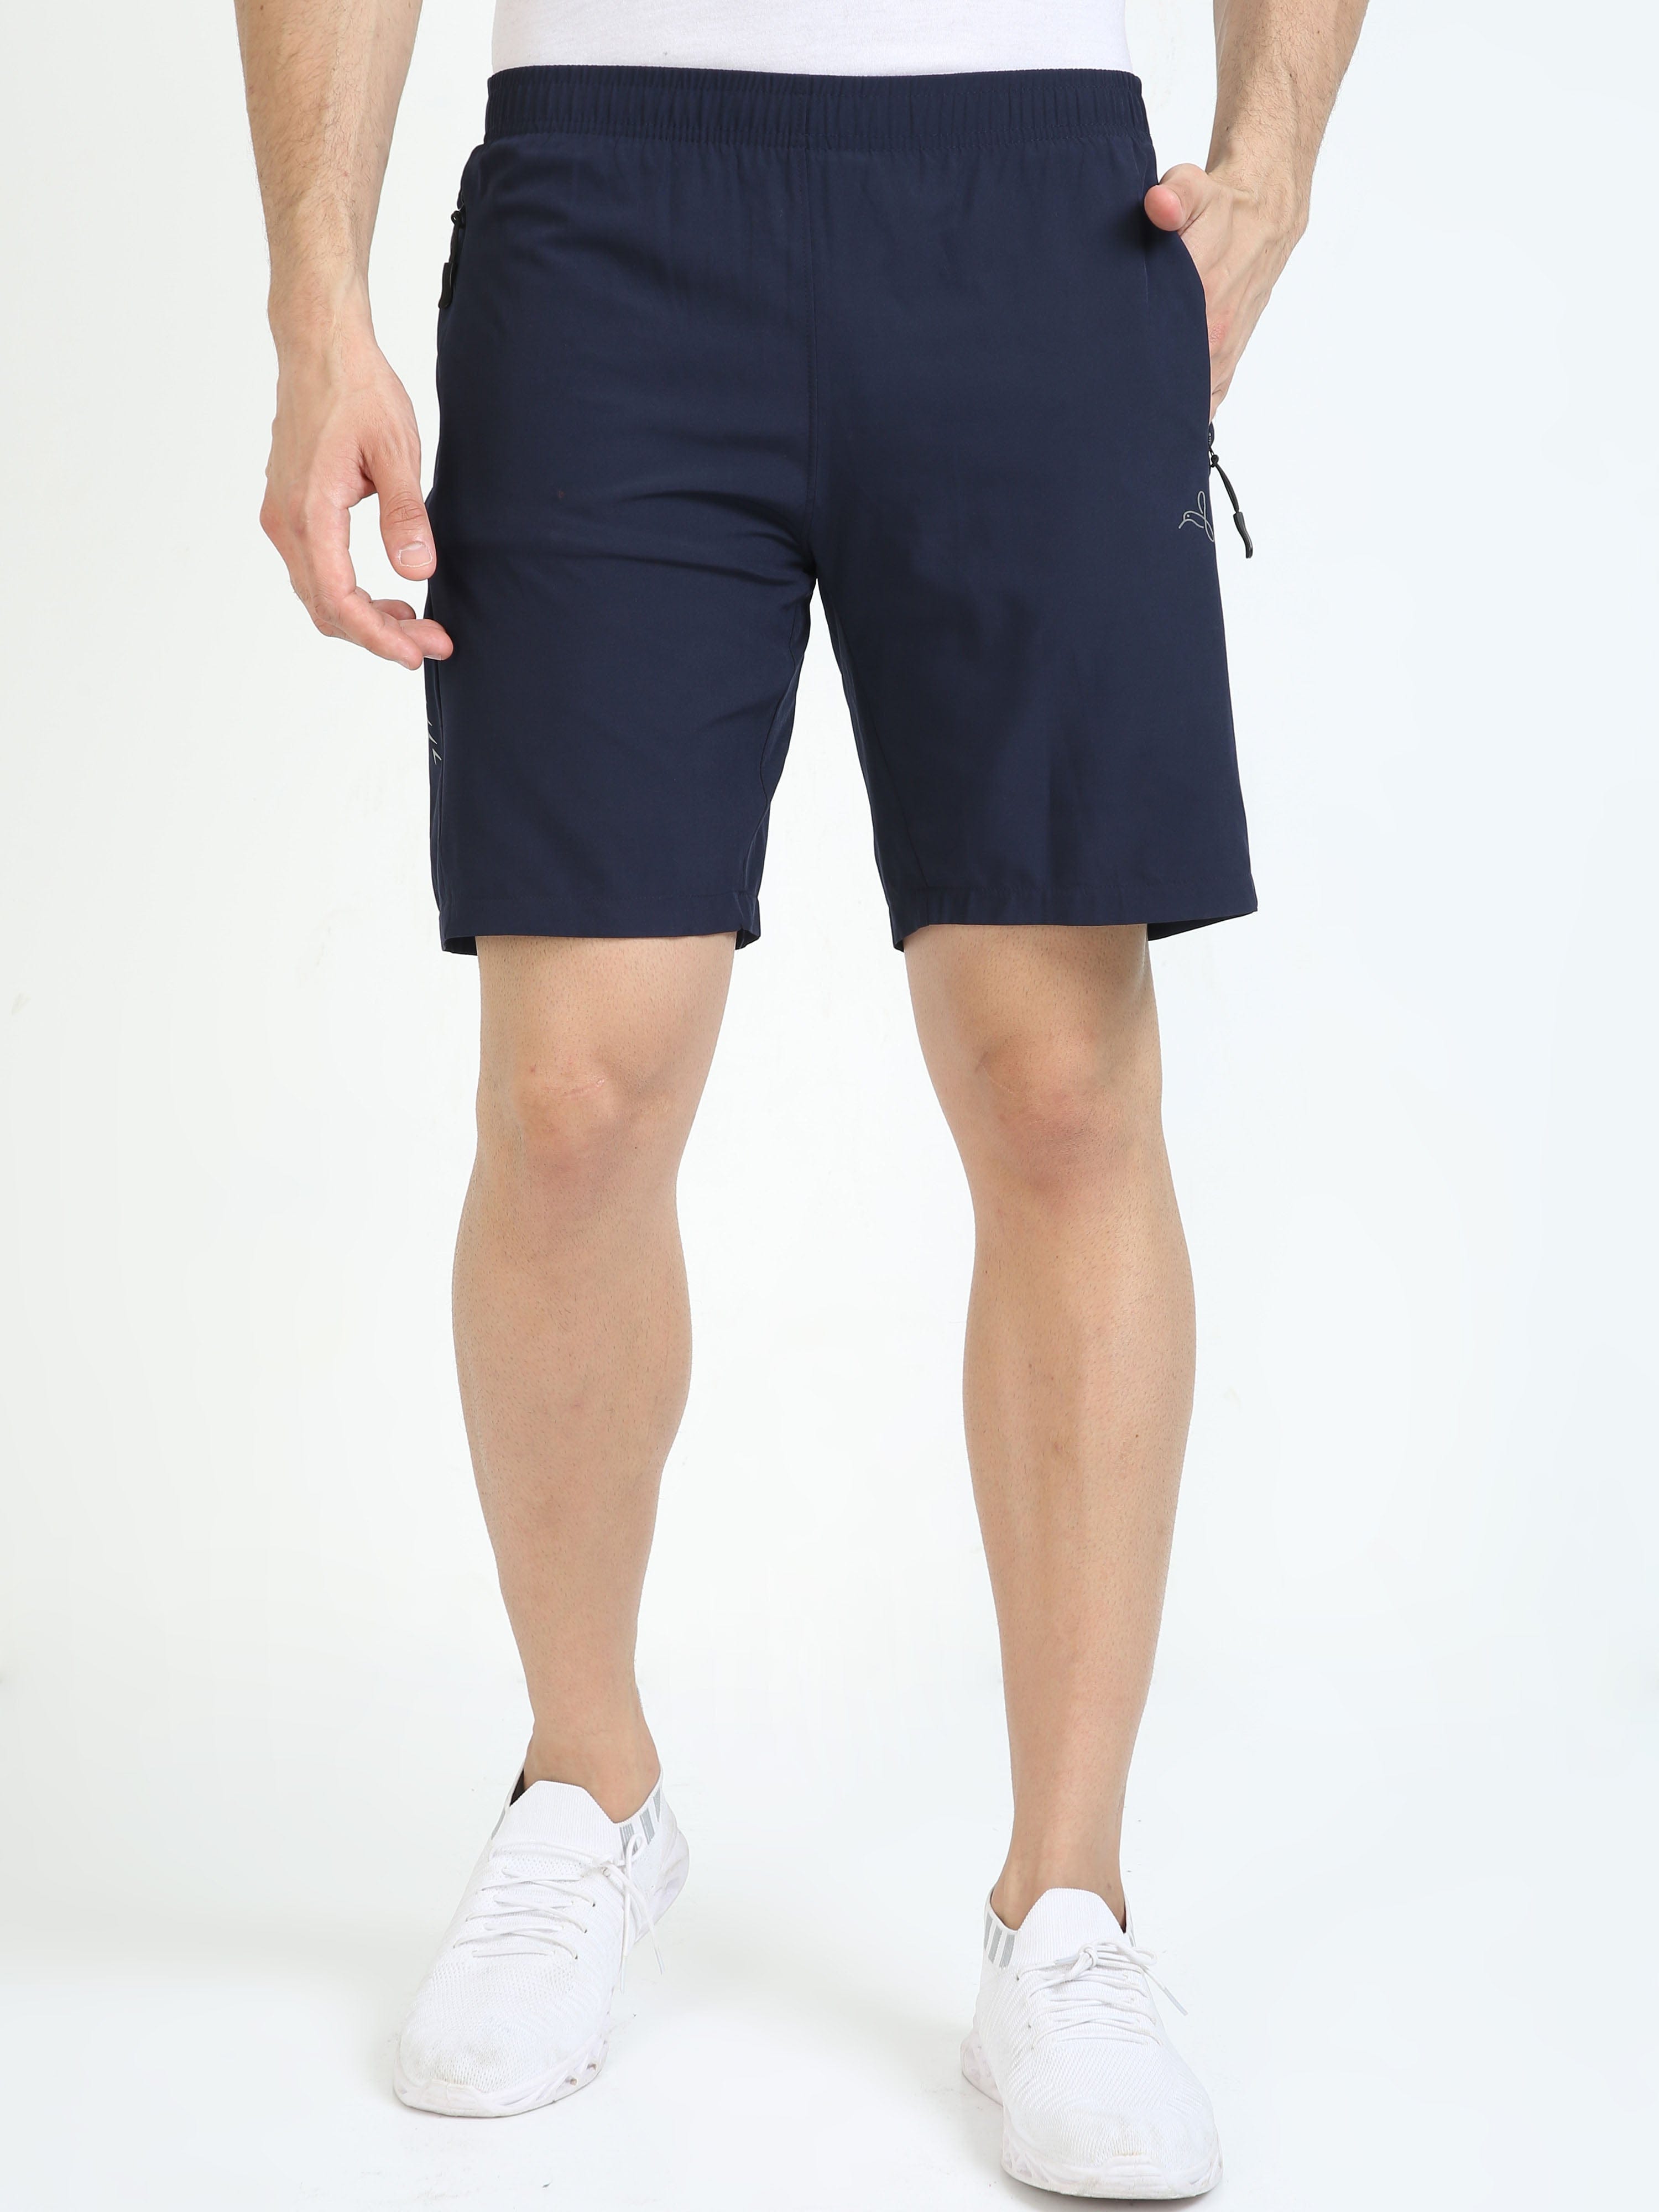 Mirage Sports shorts